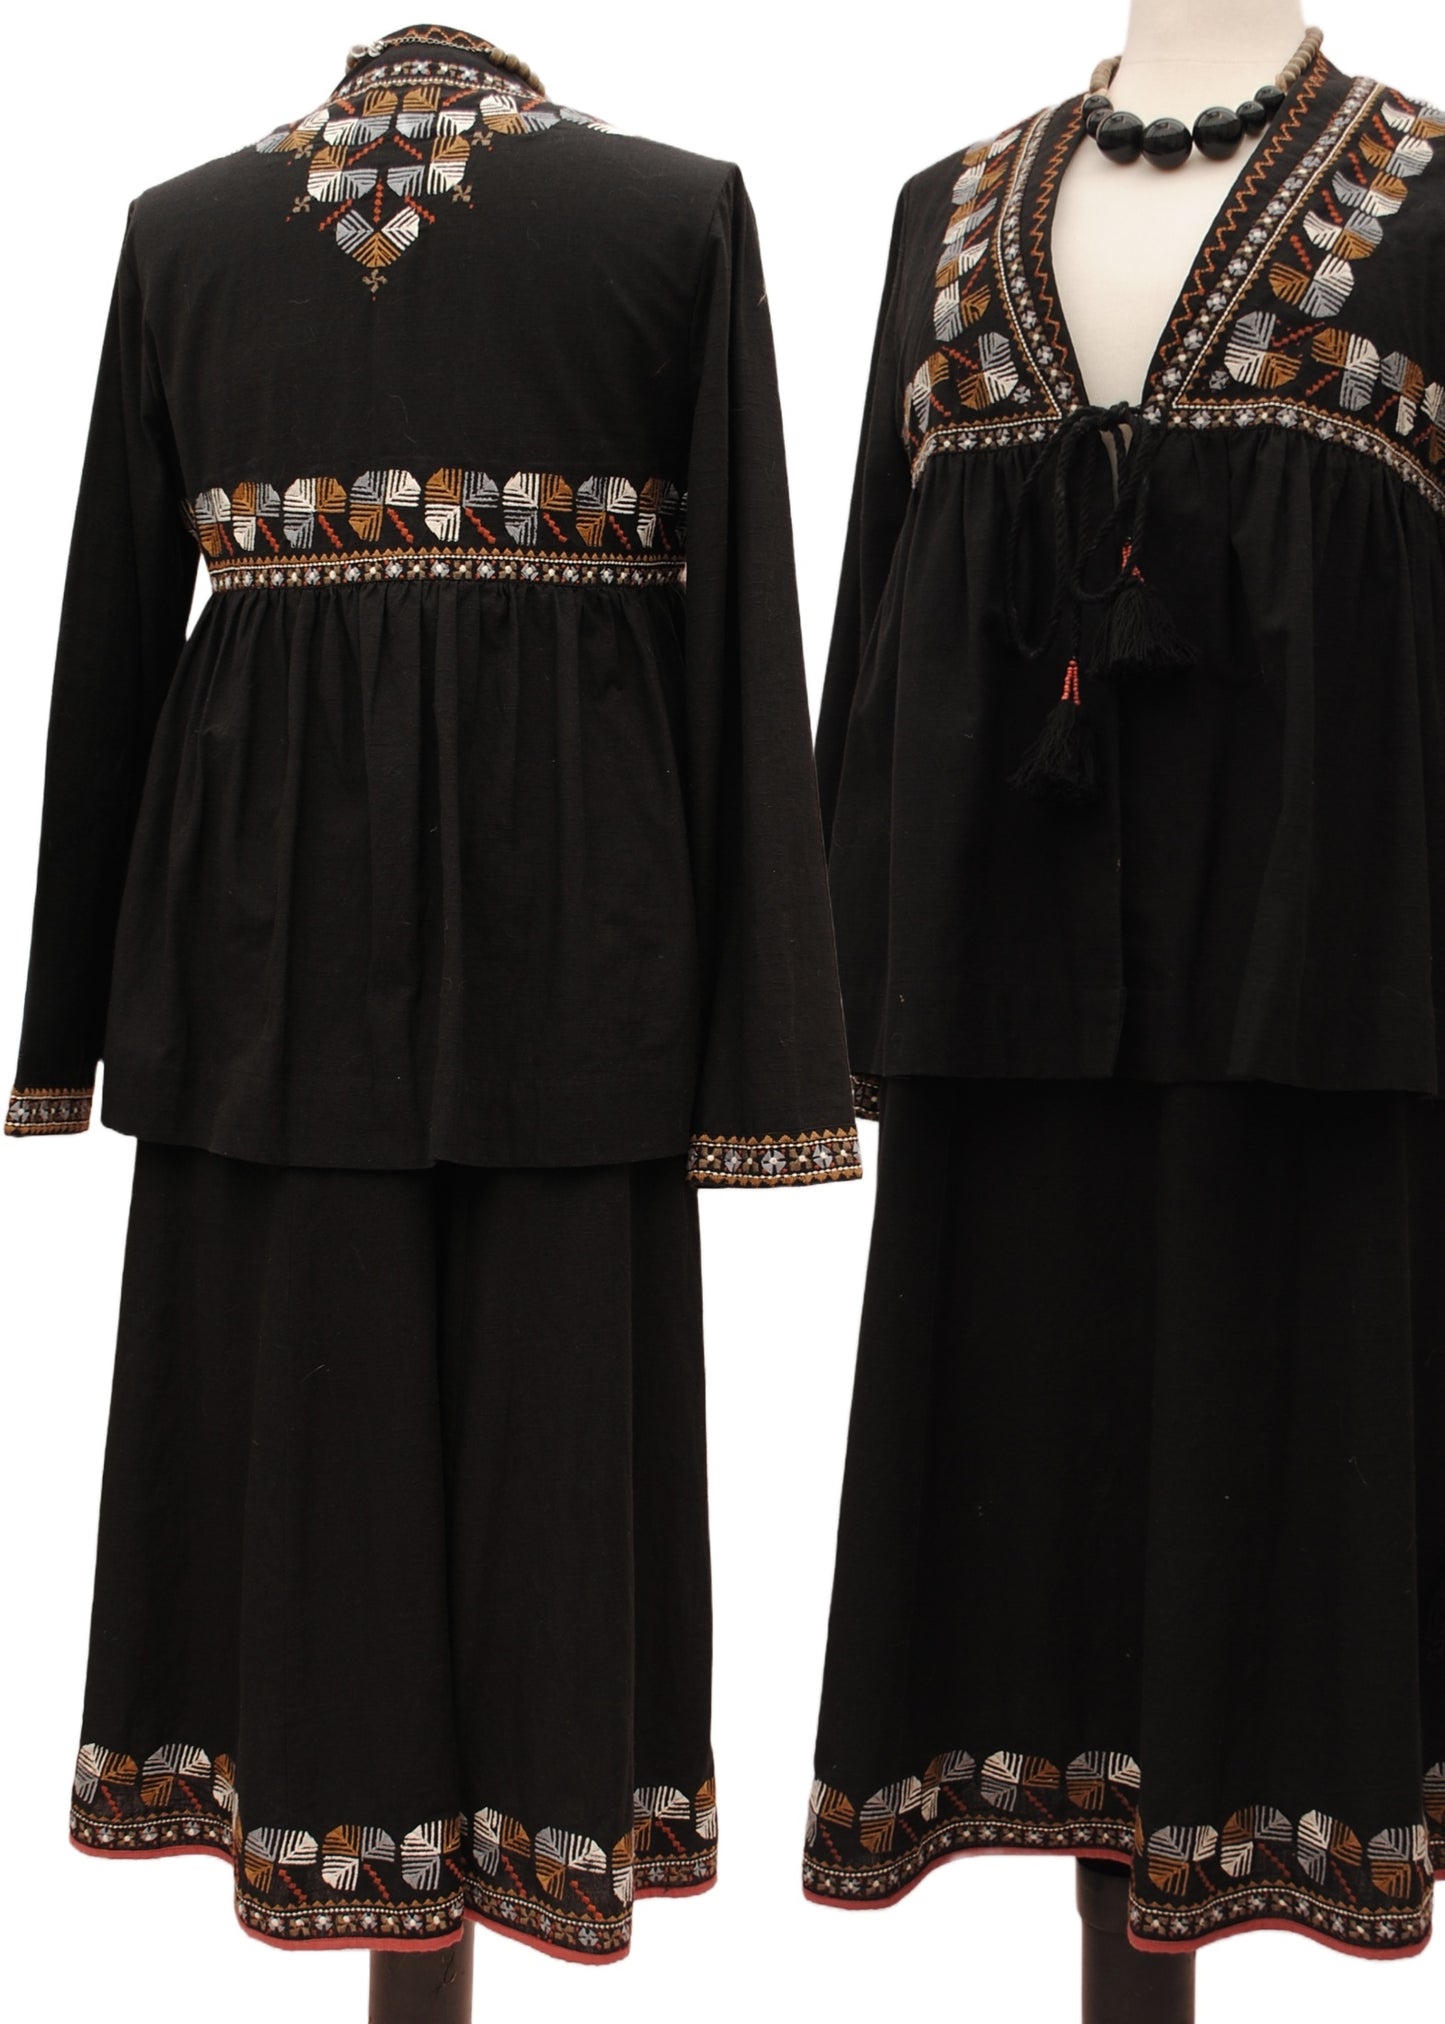 EAST Artisan Bohemian Folk Black Embroidered Cotton Skirt and Jacket